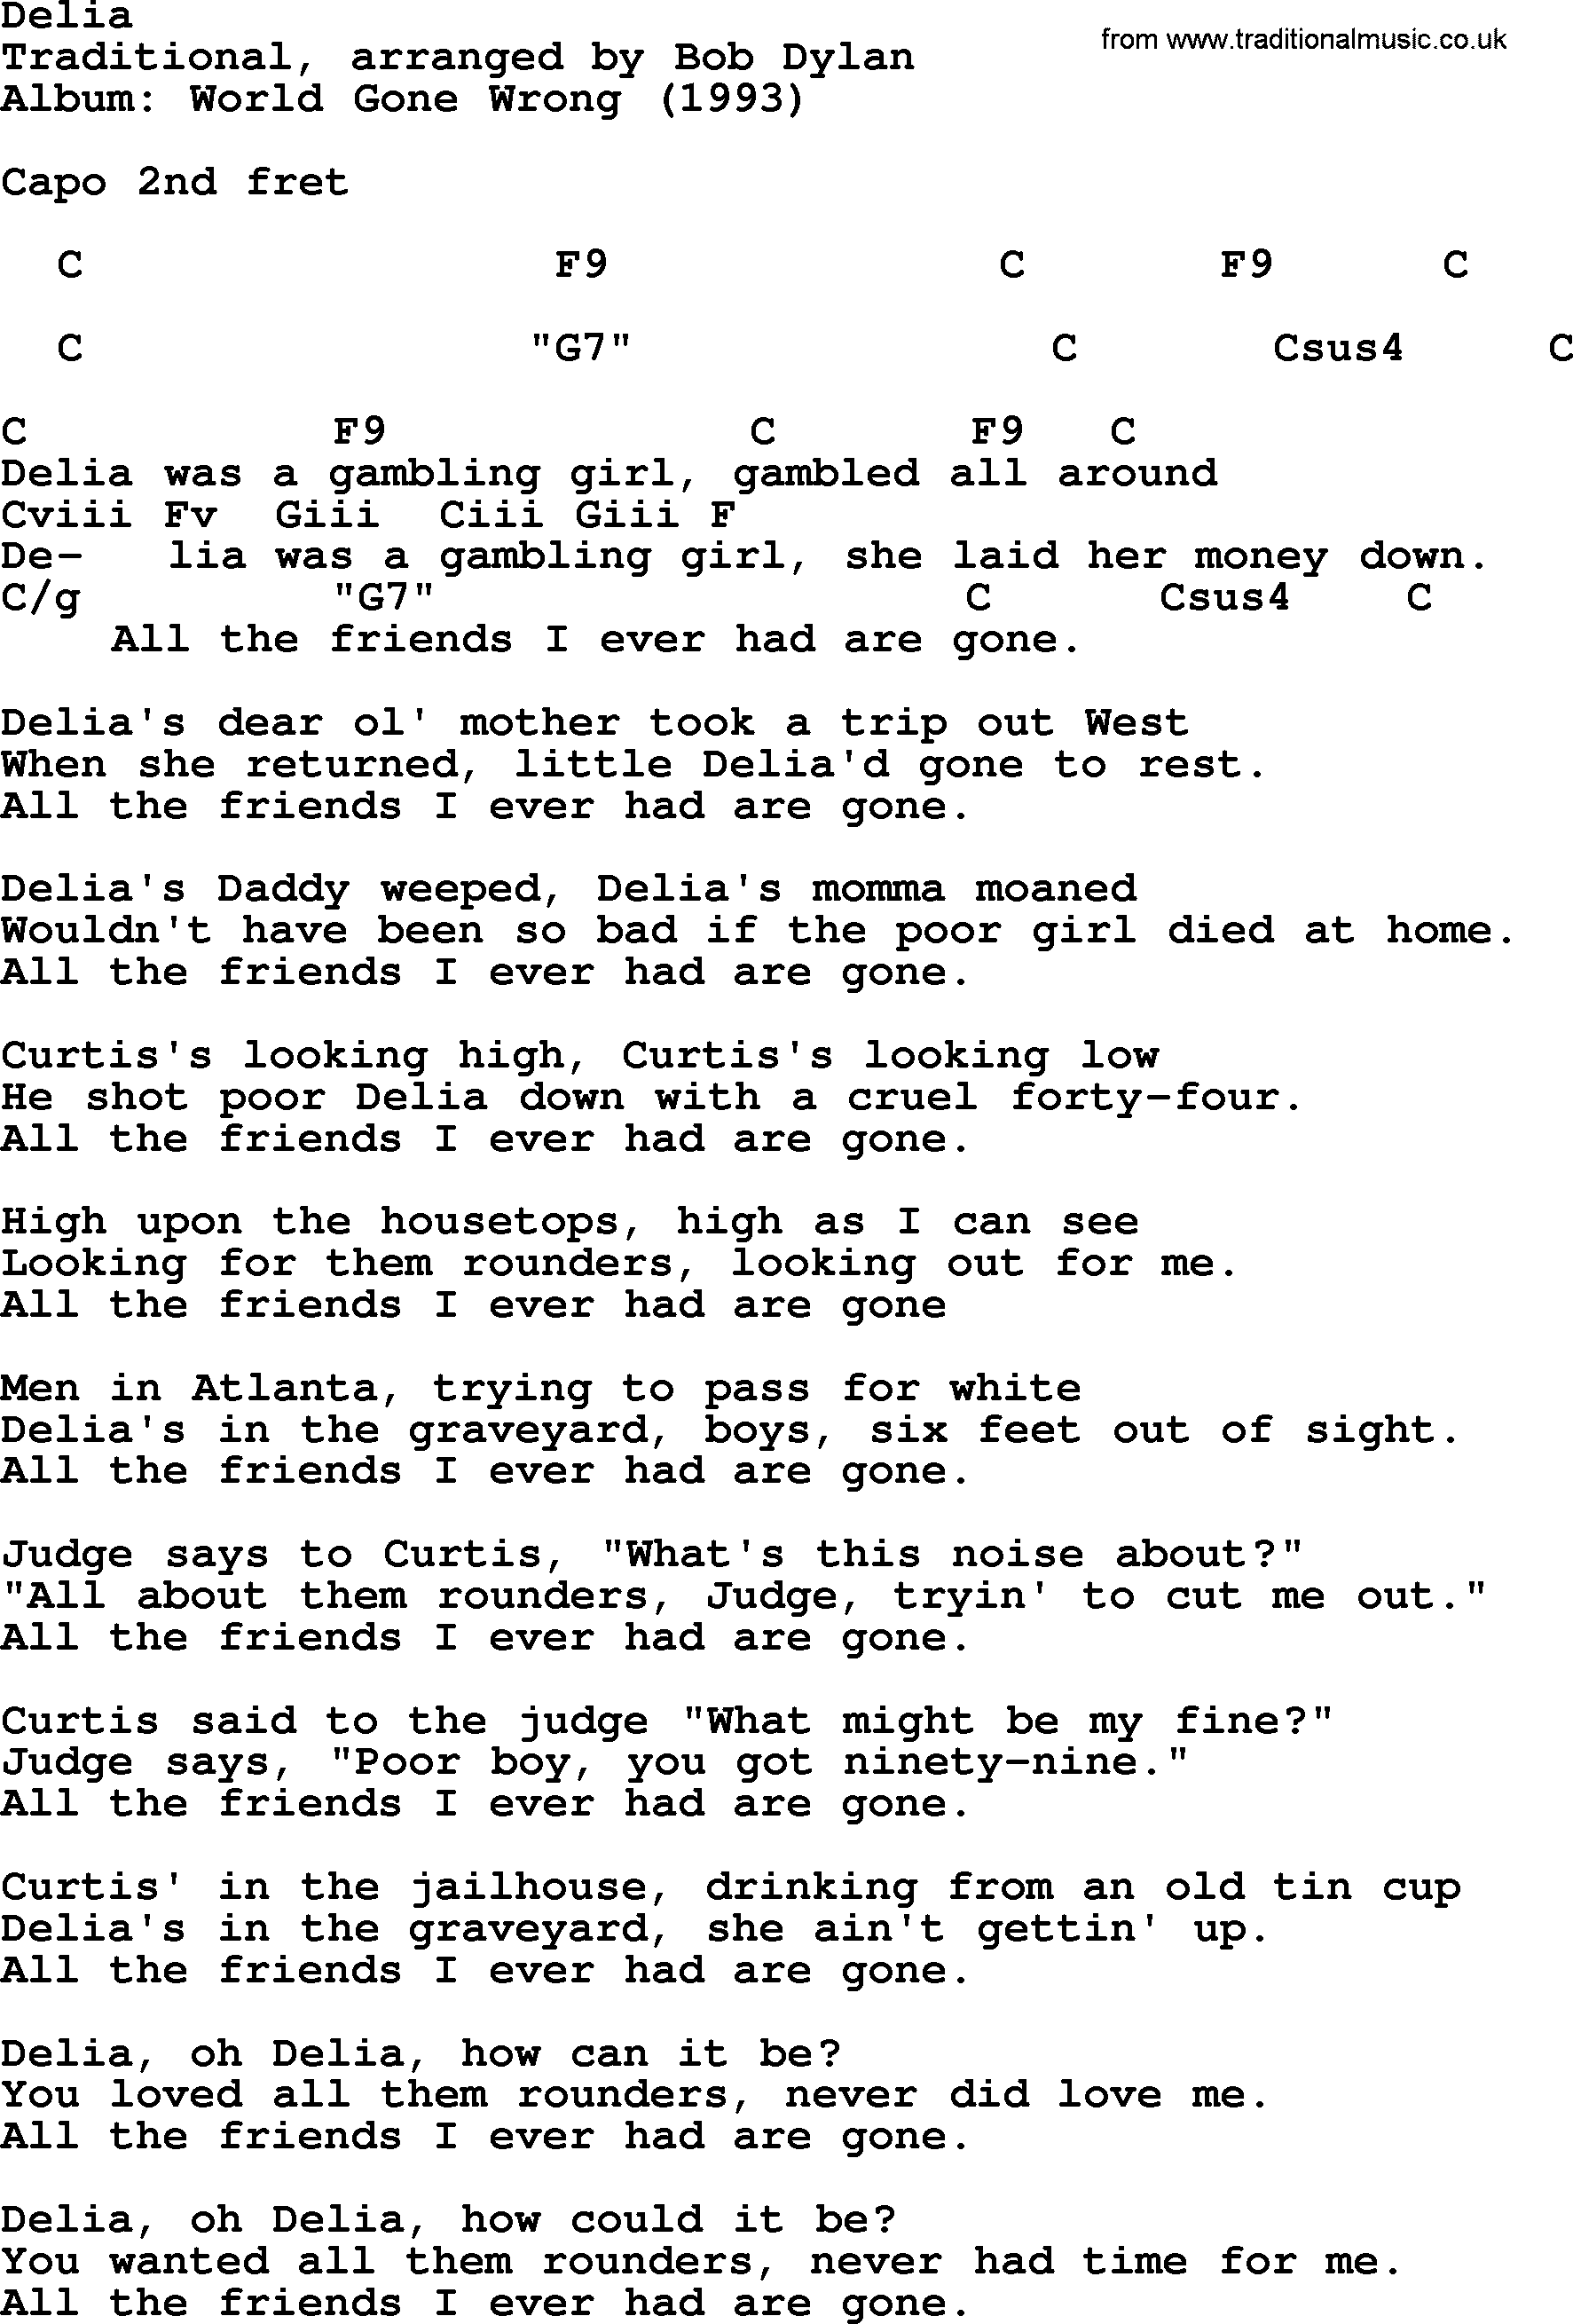 Bob Dylan song, lyrics with chords - Delia